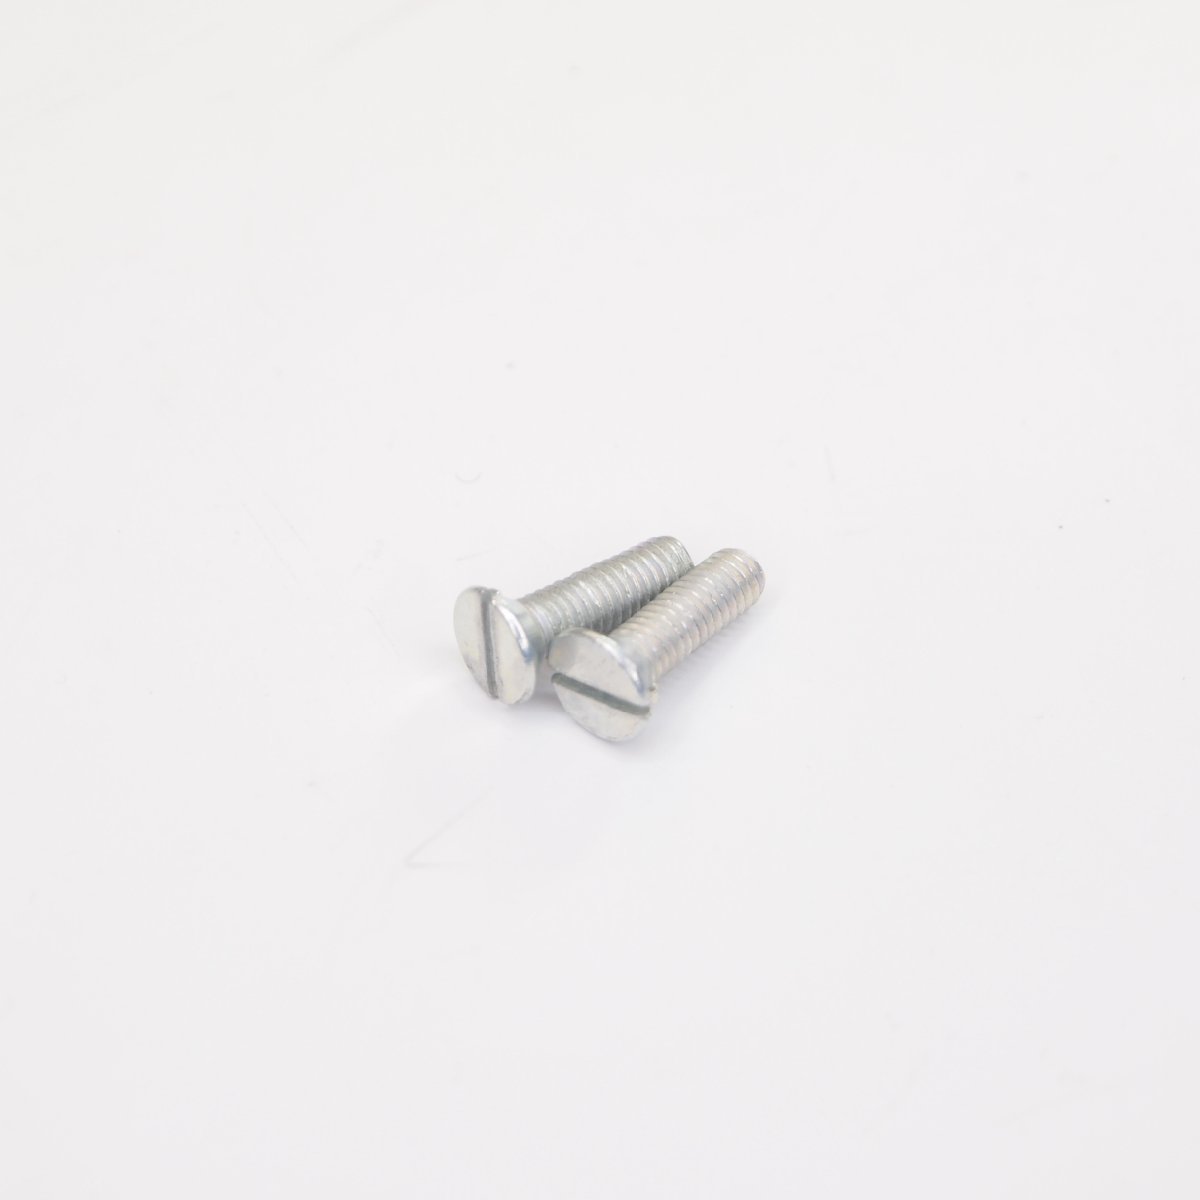 Countersunk head screw M4x12mm マイナスヘッドスクリュー Lambretta ランブレッタ VESPA ベスパ ネジ スクリュー_画像1